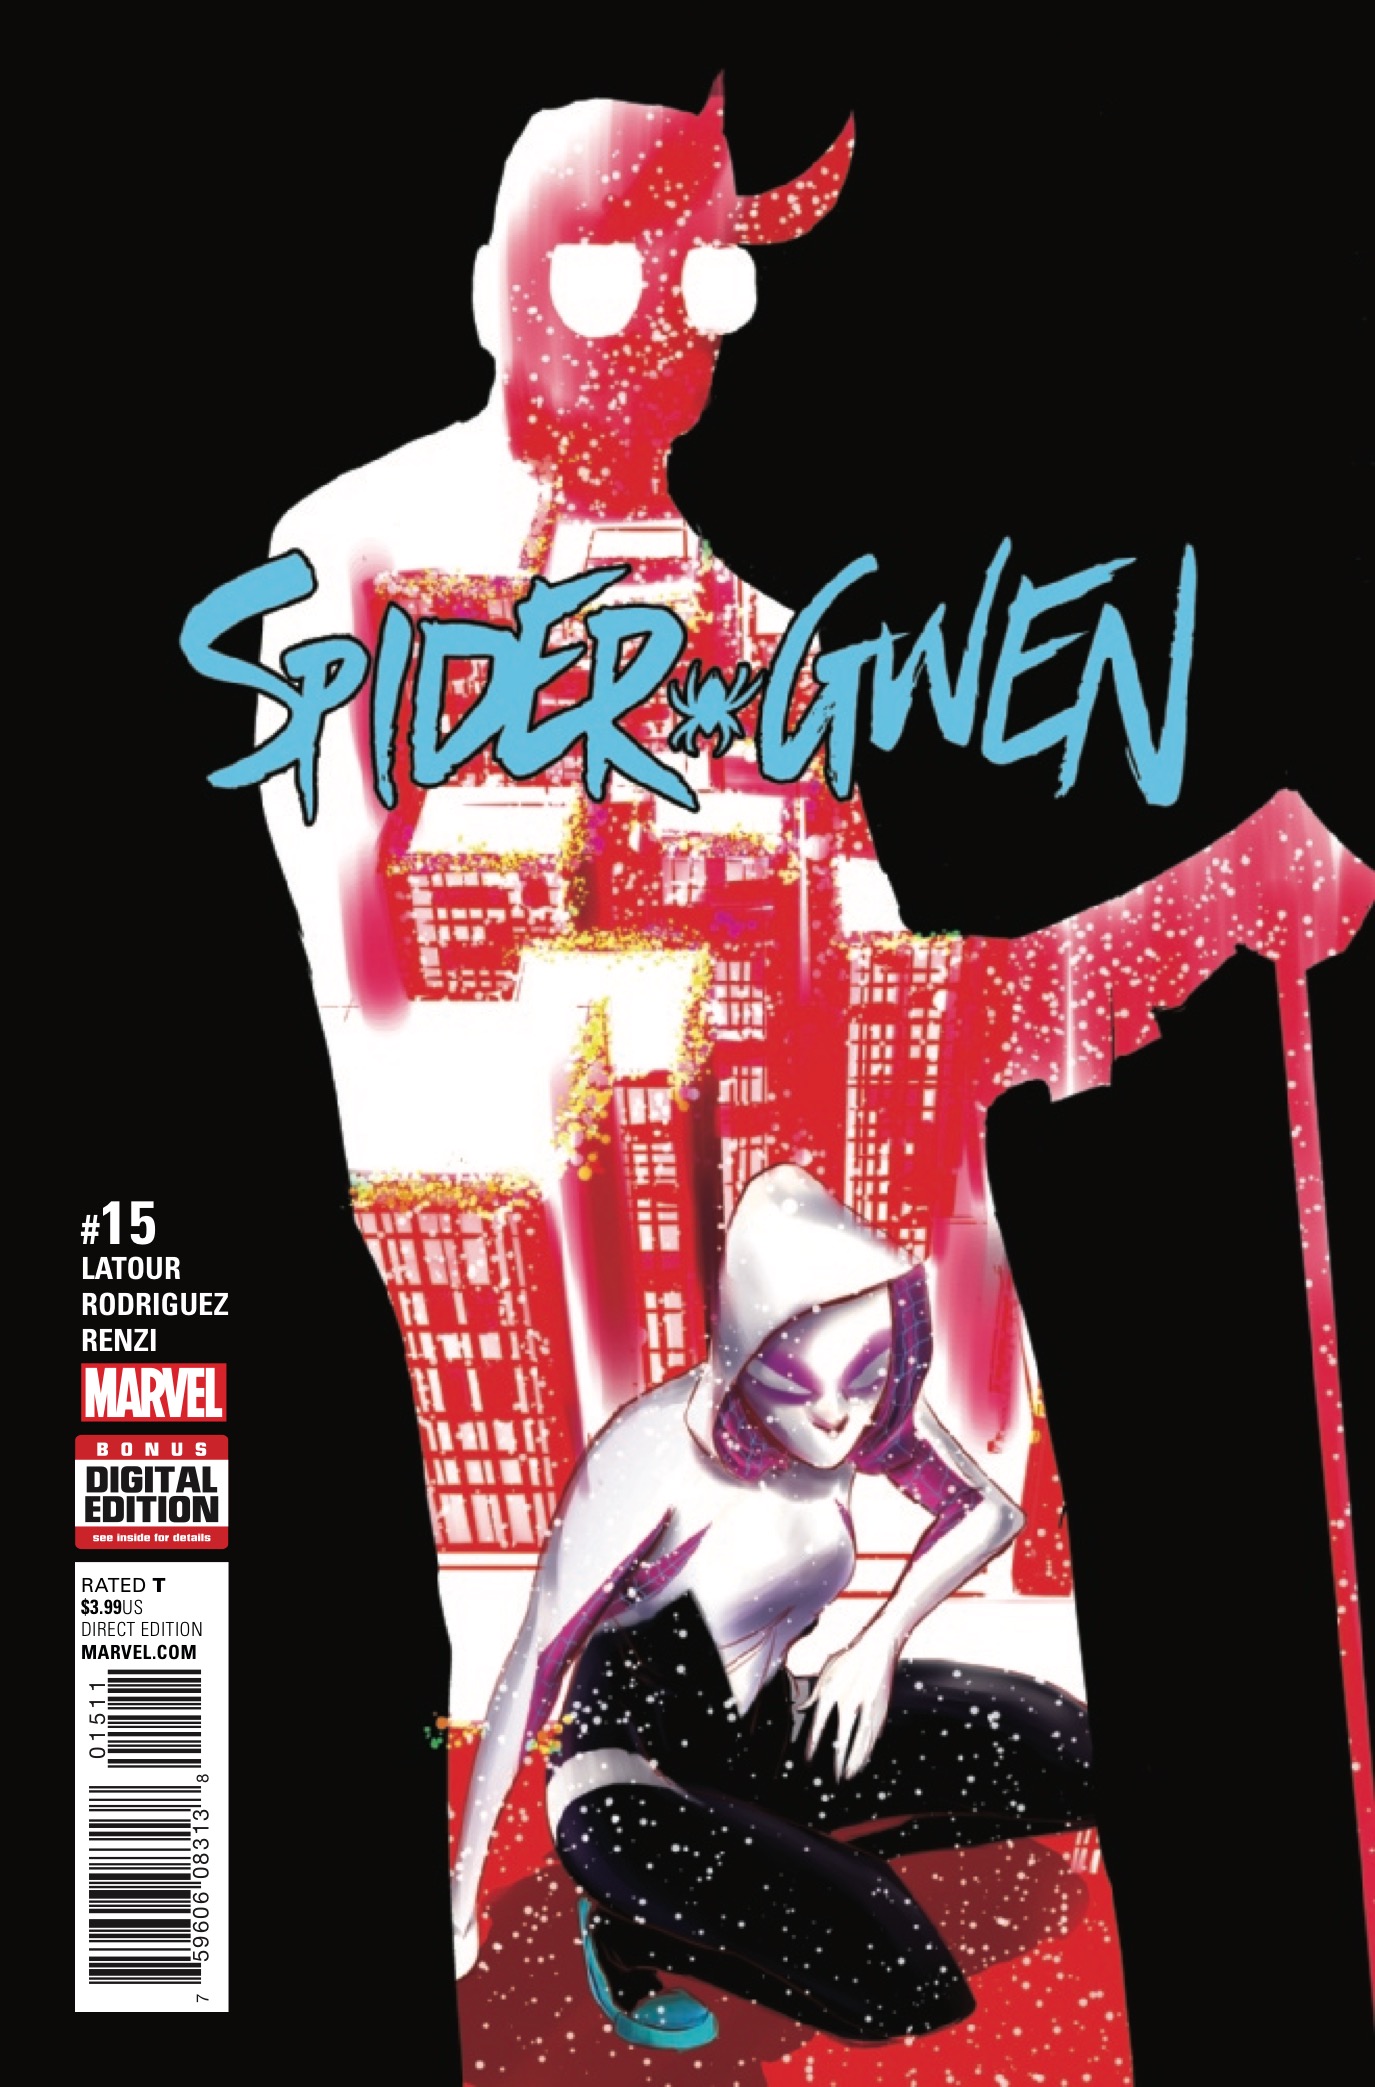 Spider-Gwen: Amazing Powers by Jason Latour